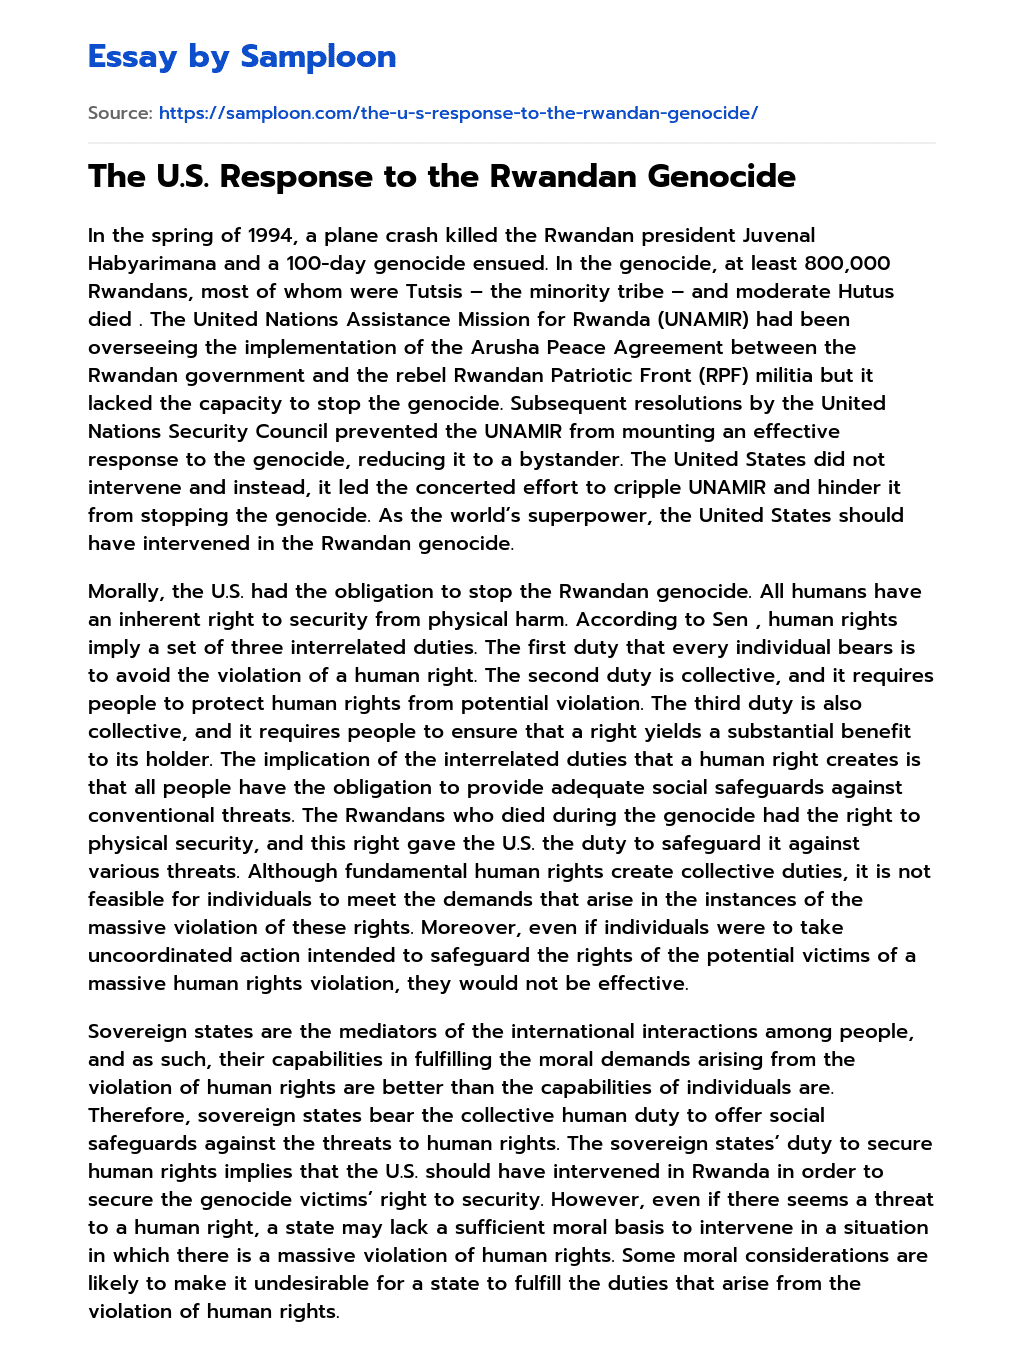 The U.S. Response to the Rwandan Genocide essay